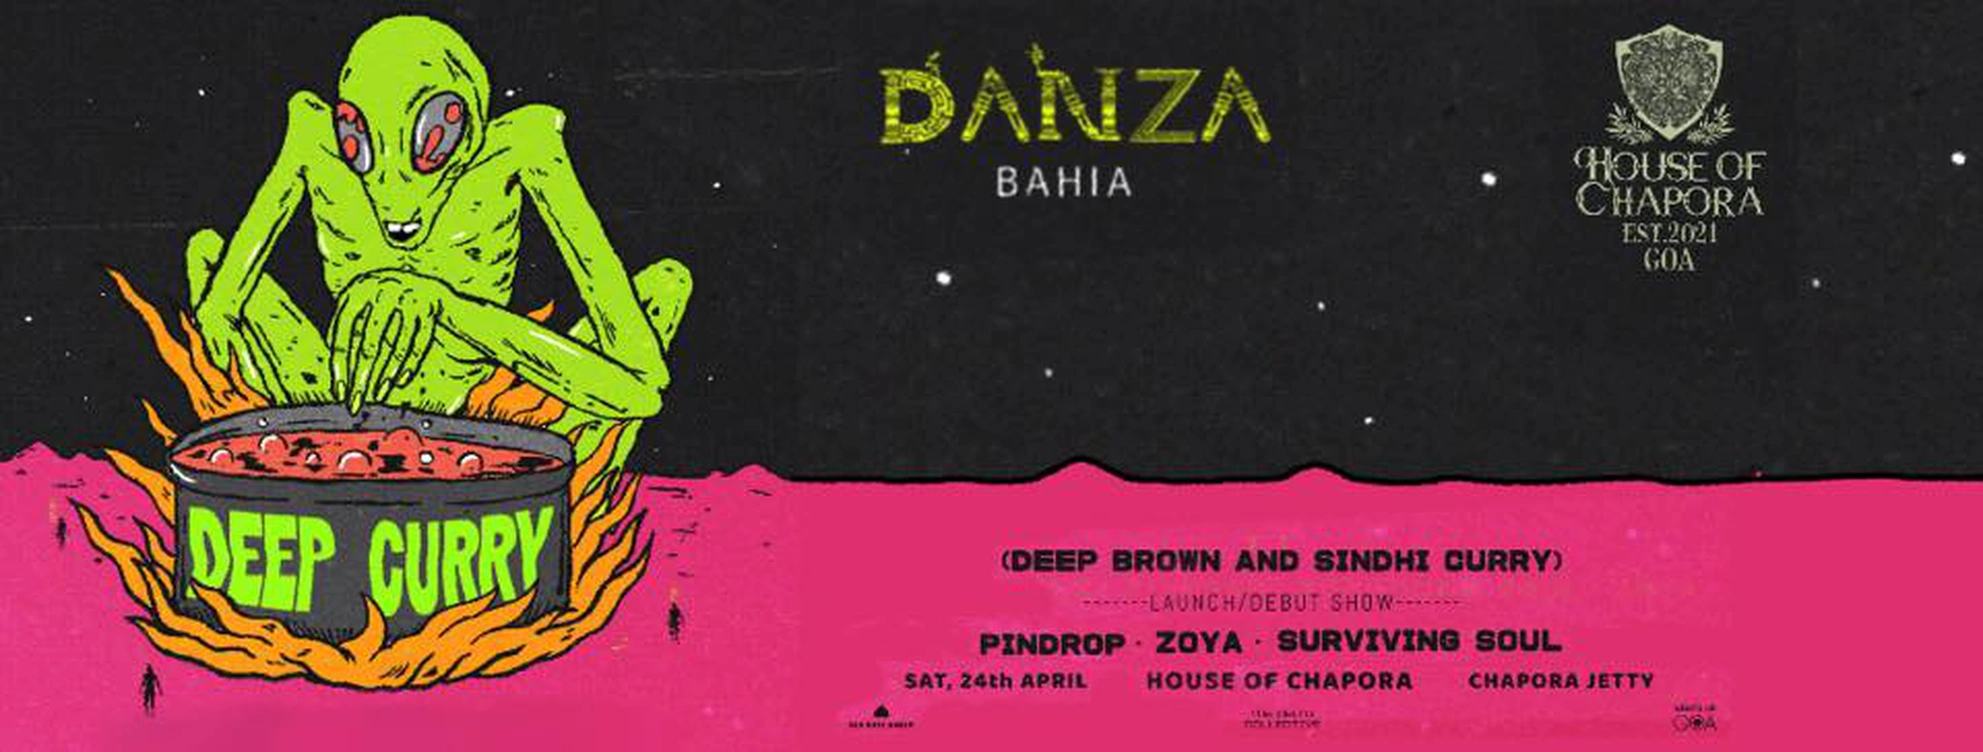 Danza Bahia - Deep Curry